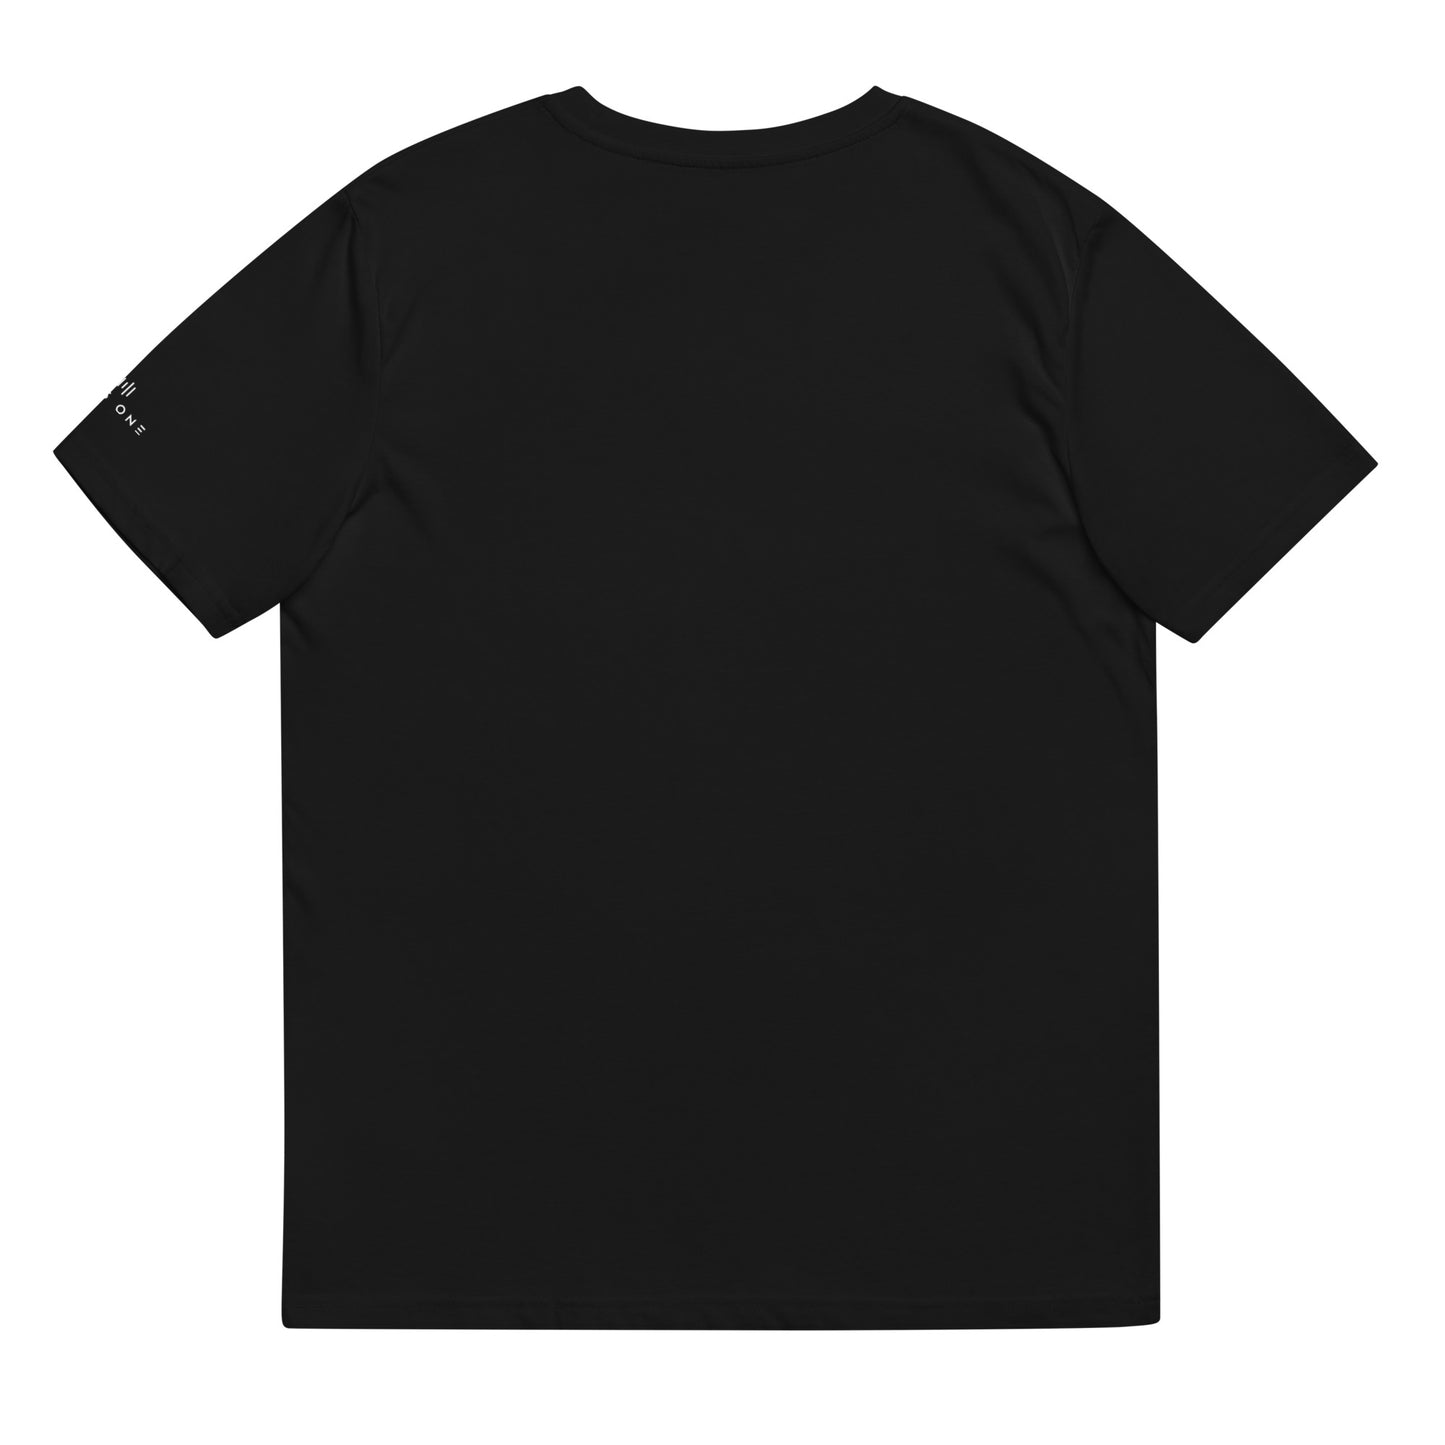 Influential Man (v1) Unisex organic cotton t-shirt (Black on Black)